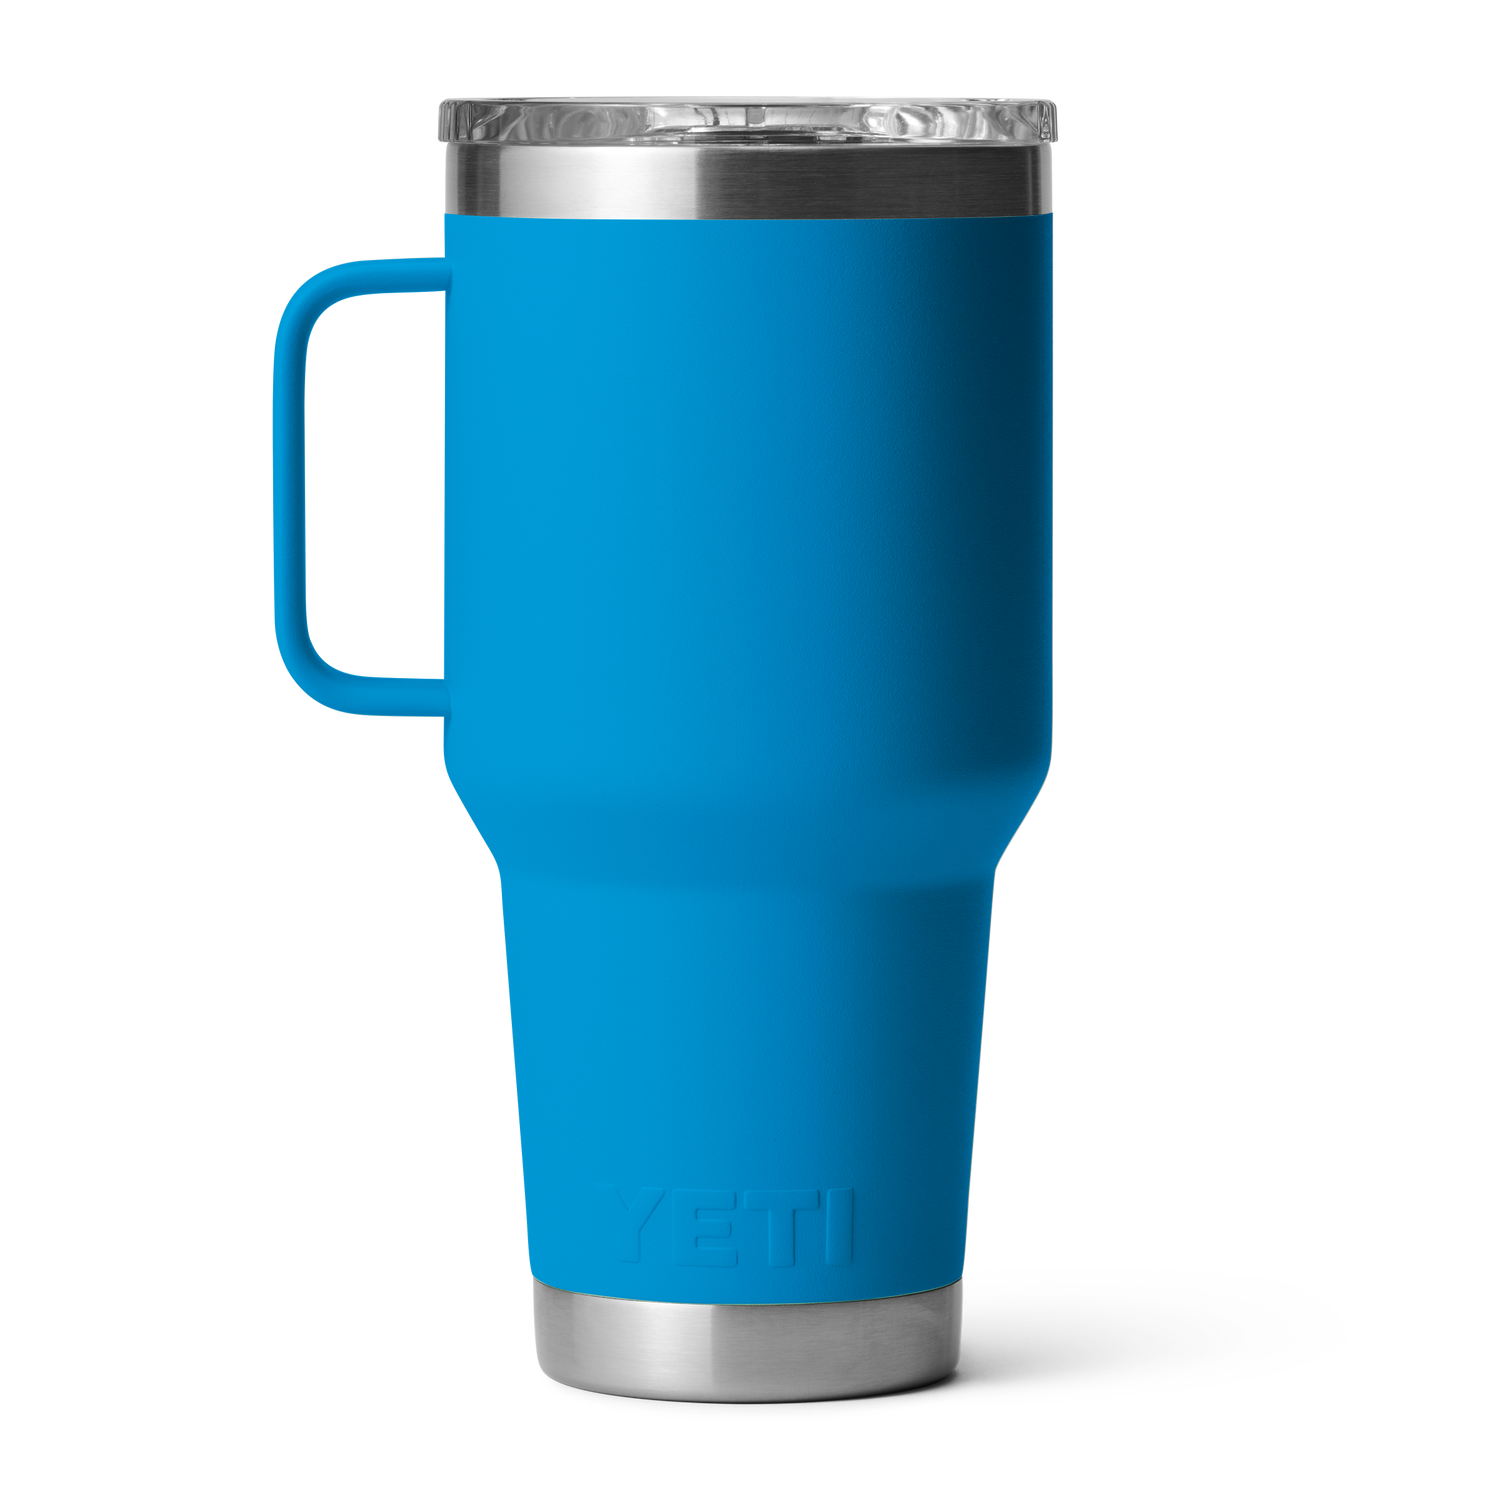 30 oz Travel Mug with Stronghold Lid (887ml)